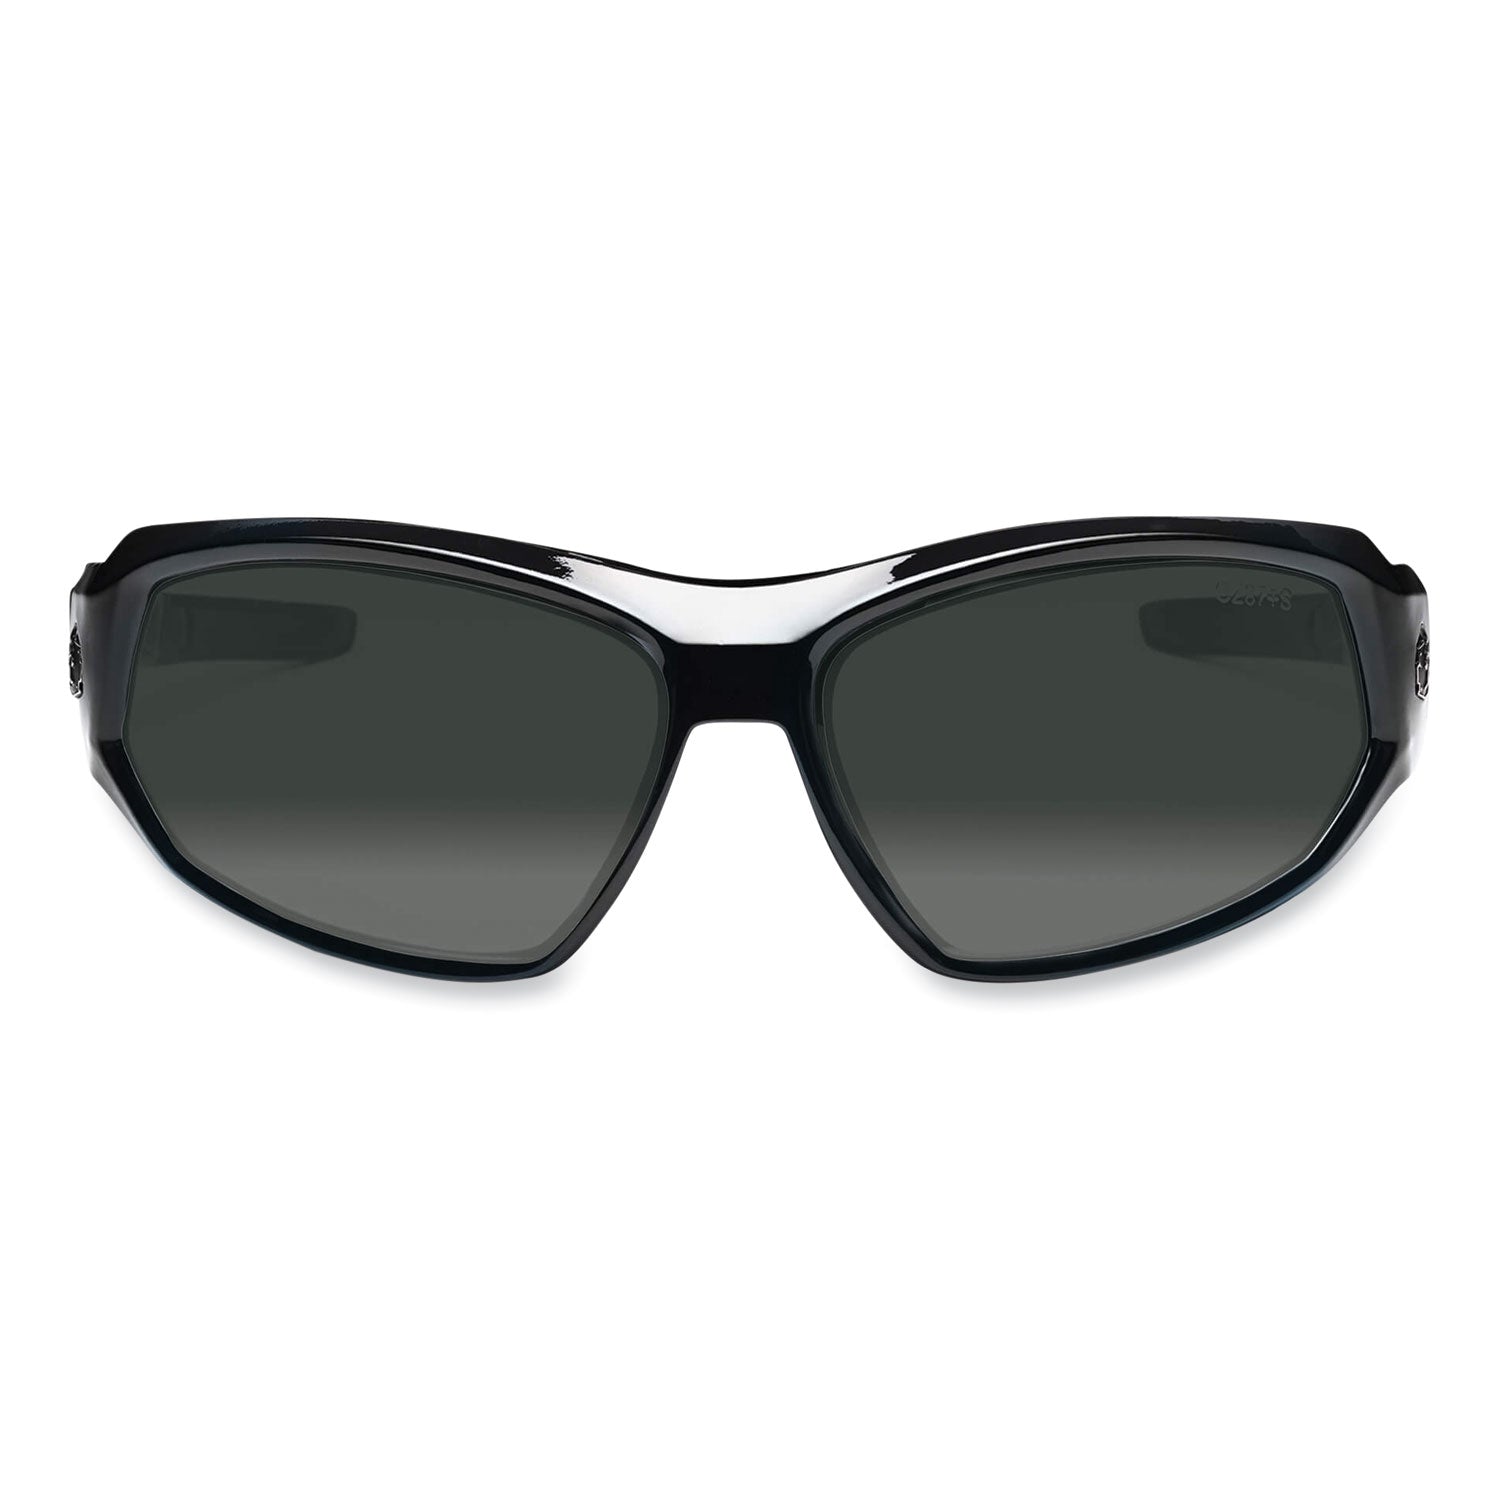 skullerz-loki-safety-glasses-goggles-black-nylon-impact-framepolarized-smoke-polycarbonate-lens-ships-in-1-3-business-days_ego56031 - 5